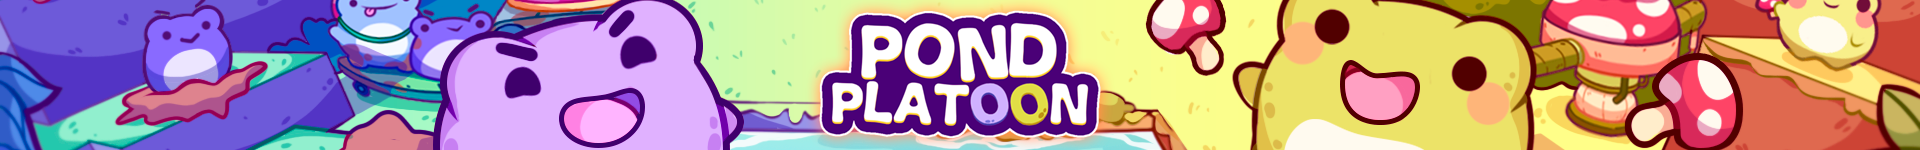 Pond Platoon